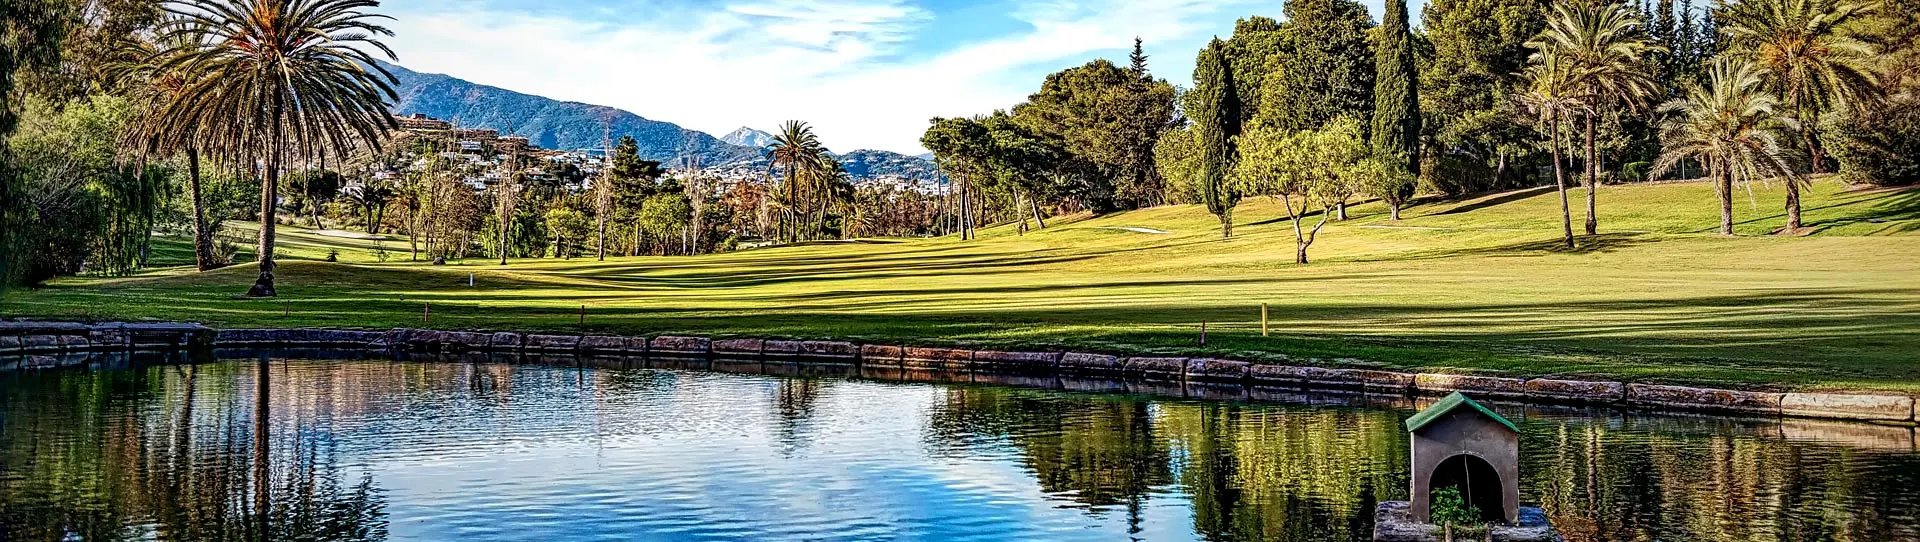 Spain golf holidays - Marbella & Malaga Experience - Photo 2